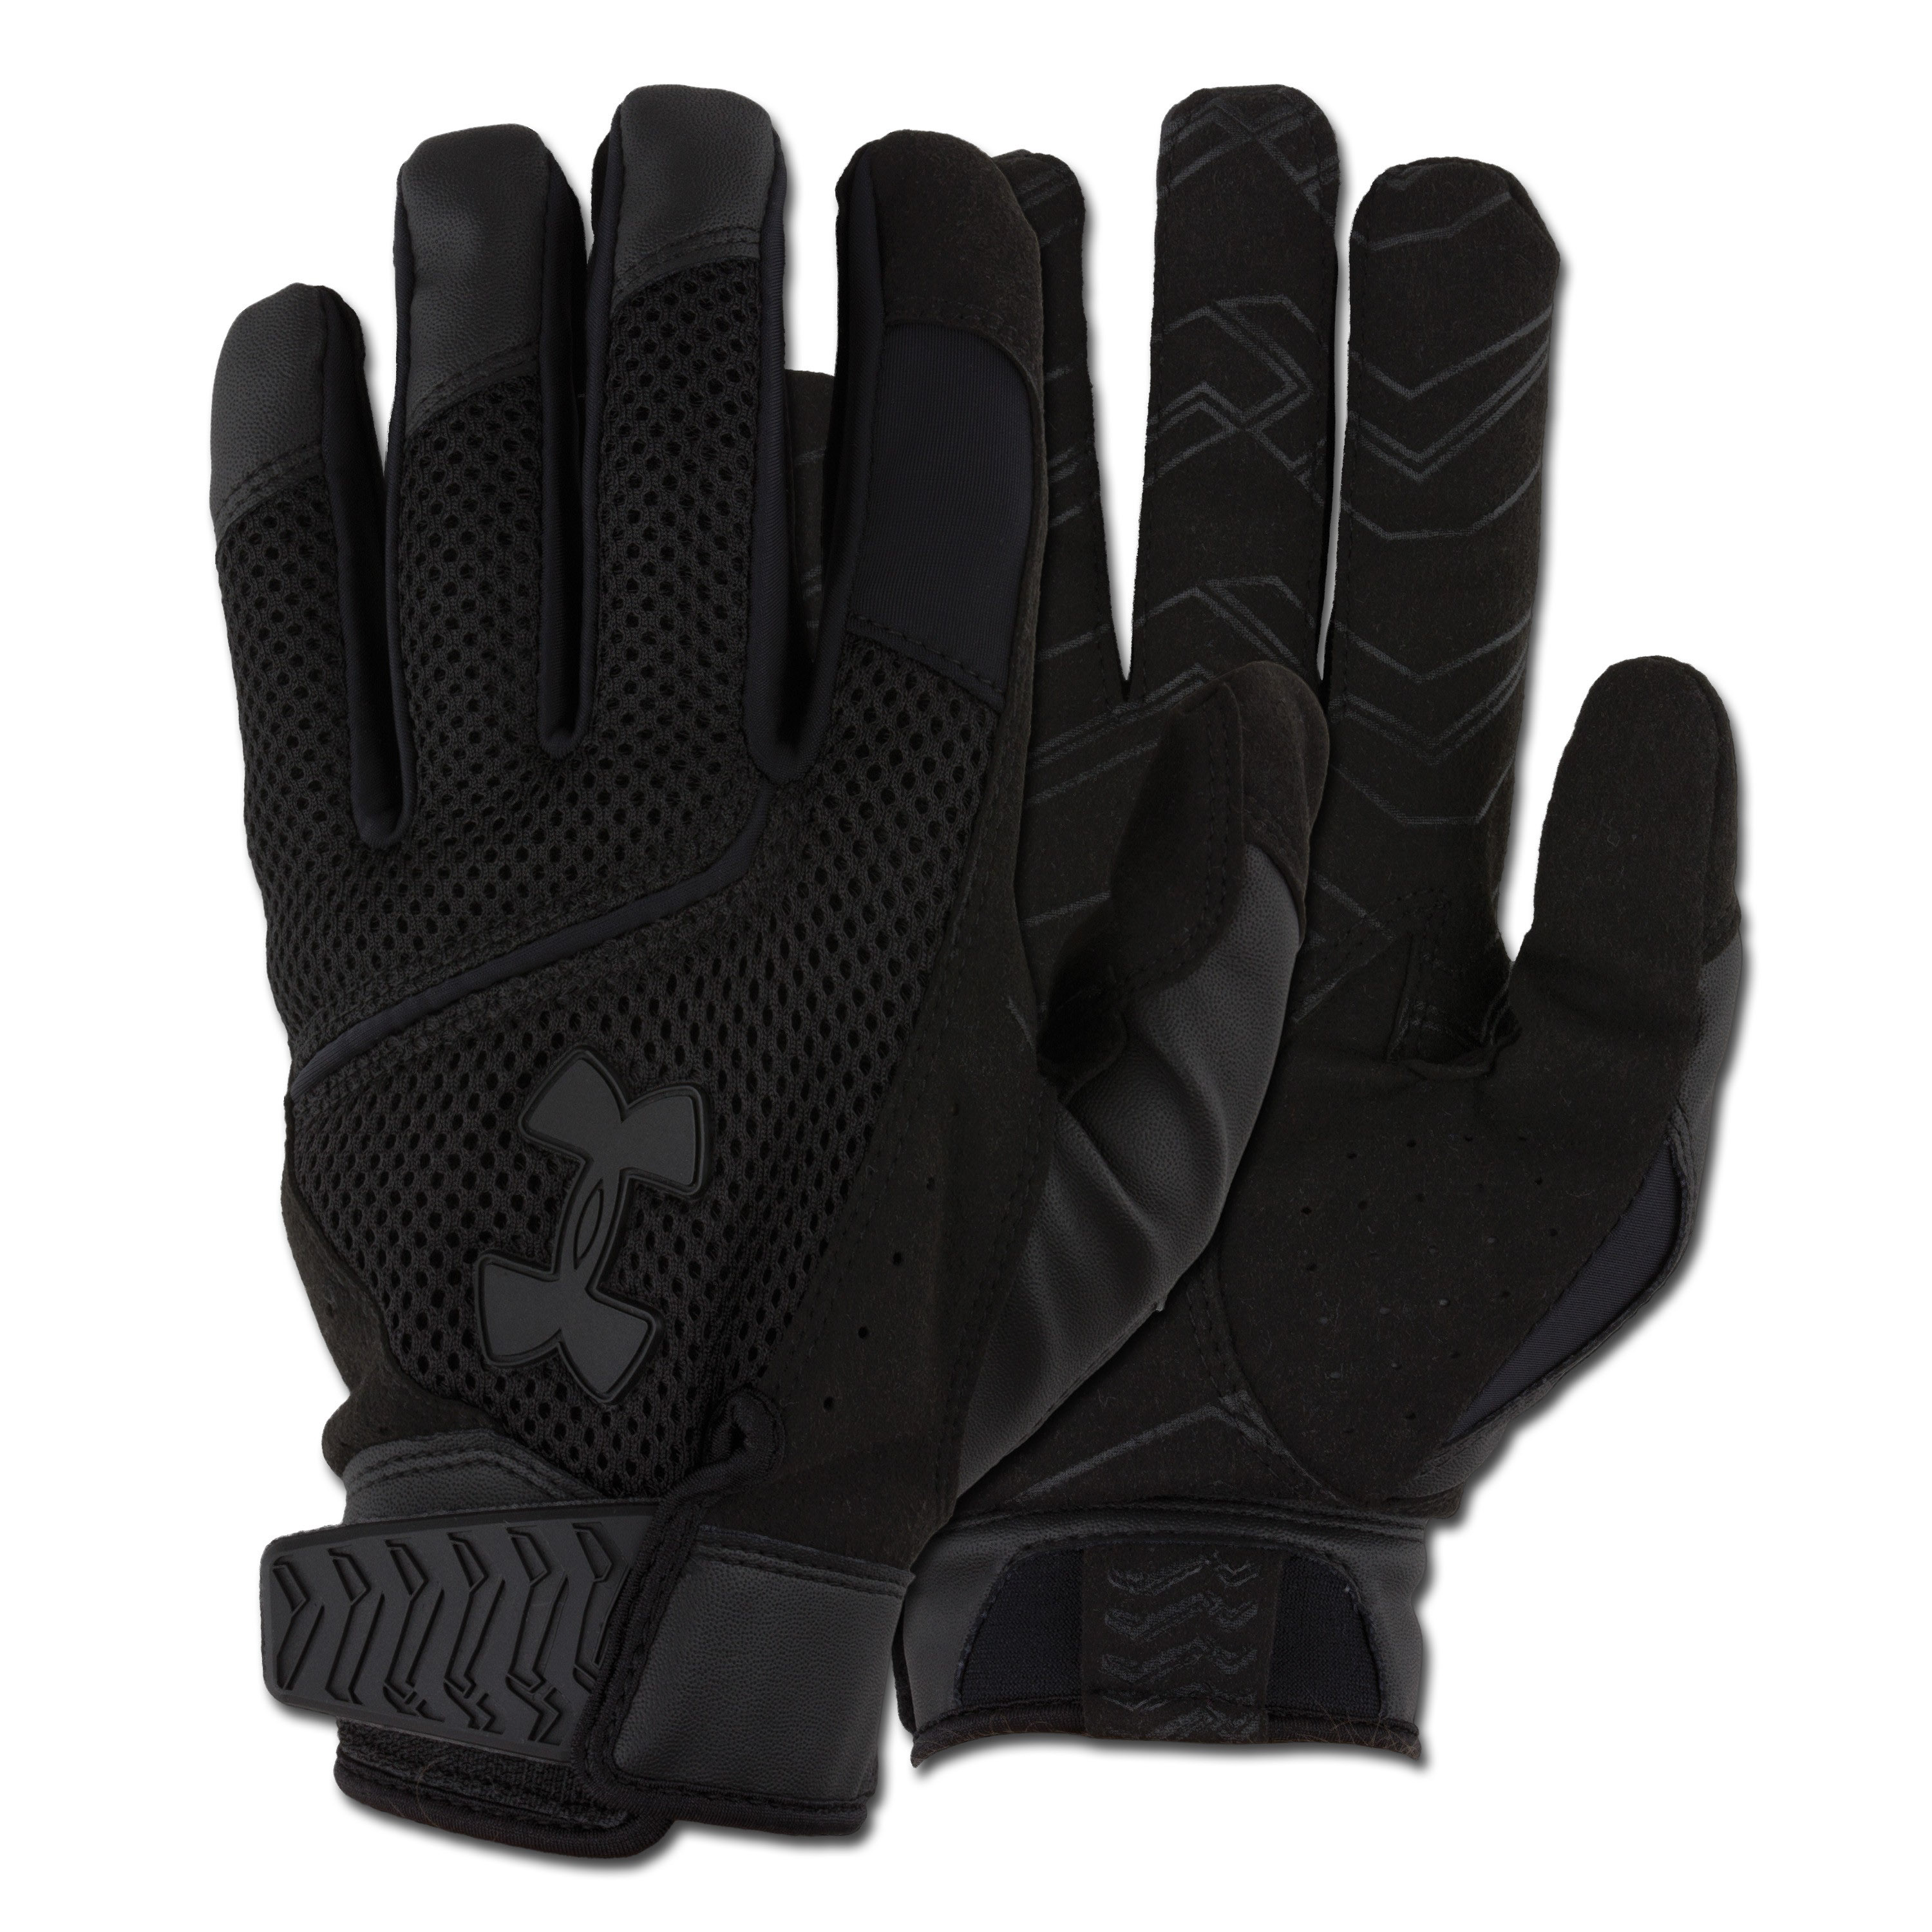 Under Armour Gloves Summer Blackout Tactical black | Under Armour ...